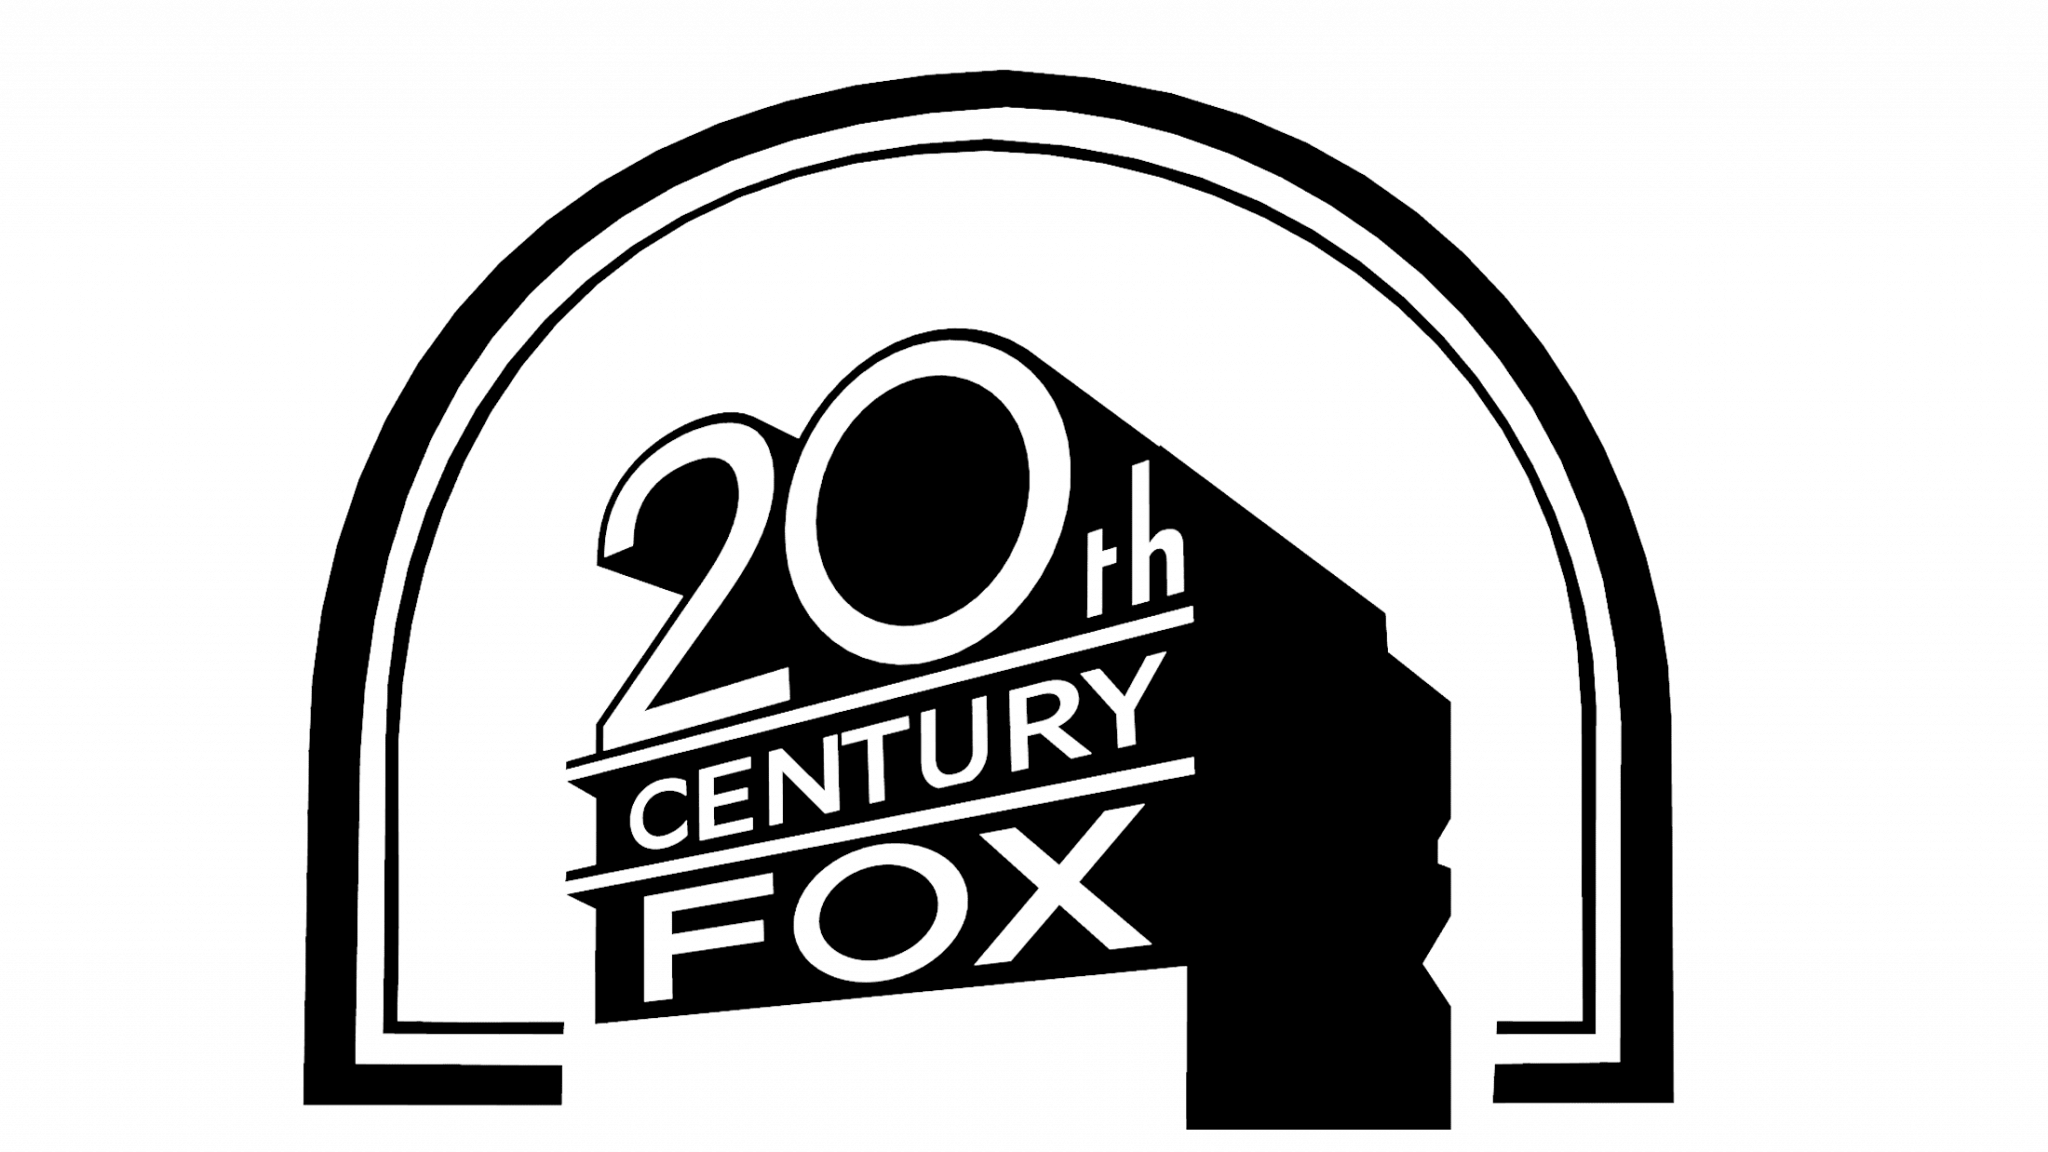 20th Century Foxtheme Logo Image For Free Free Logo Image